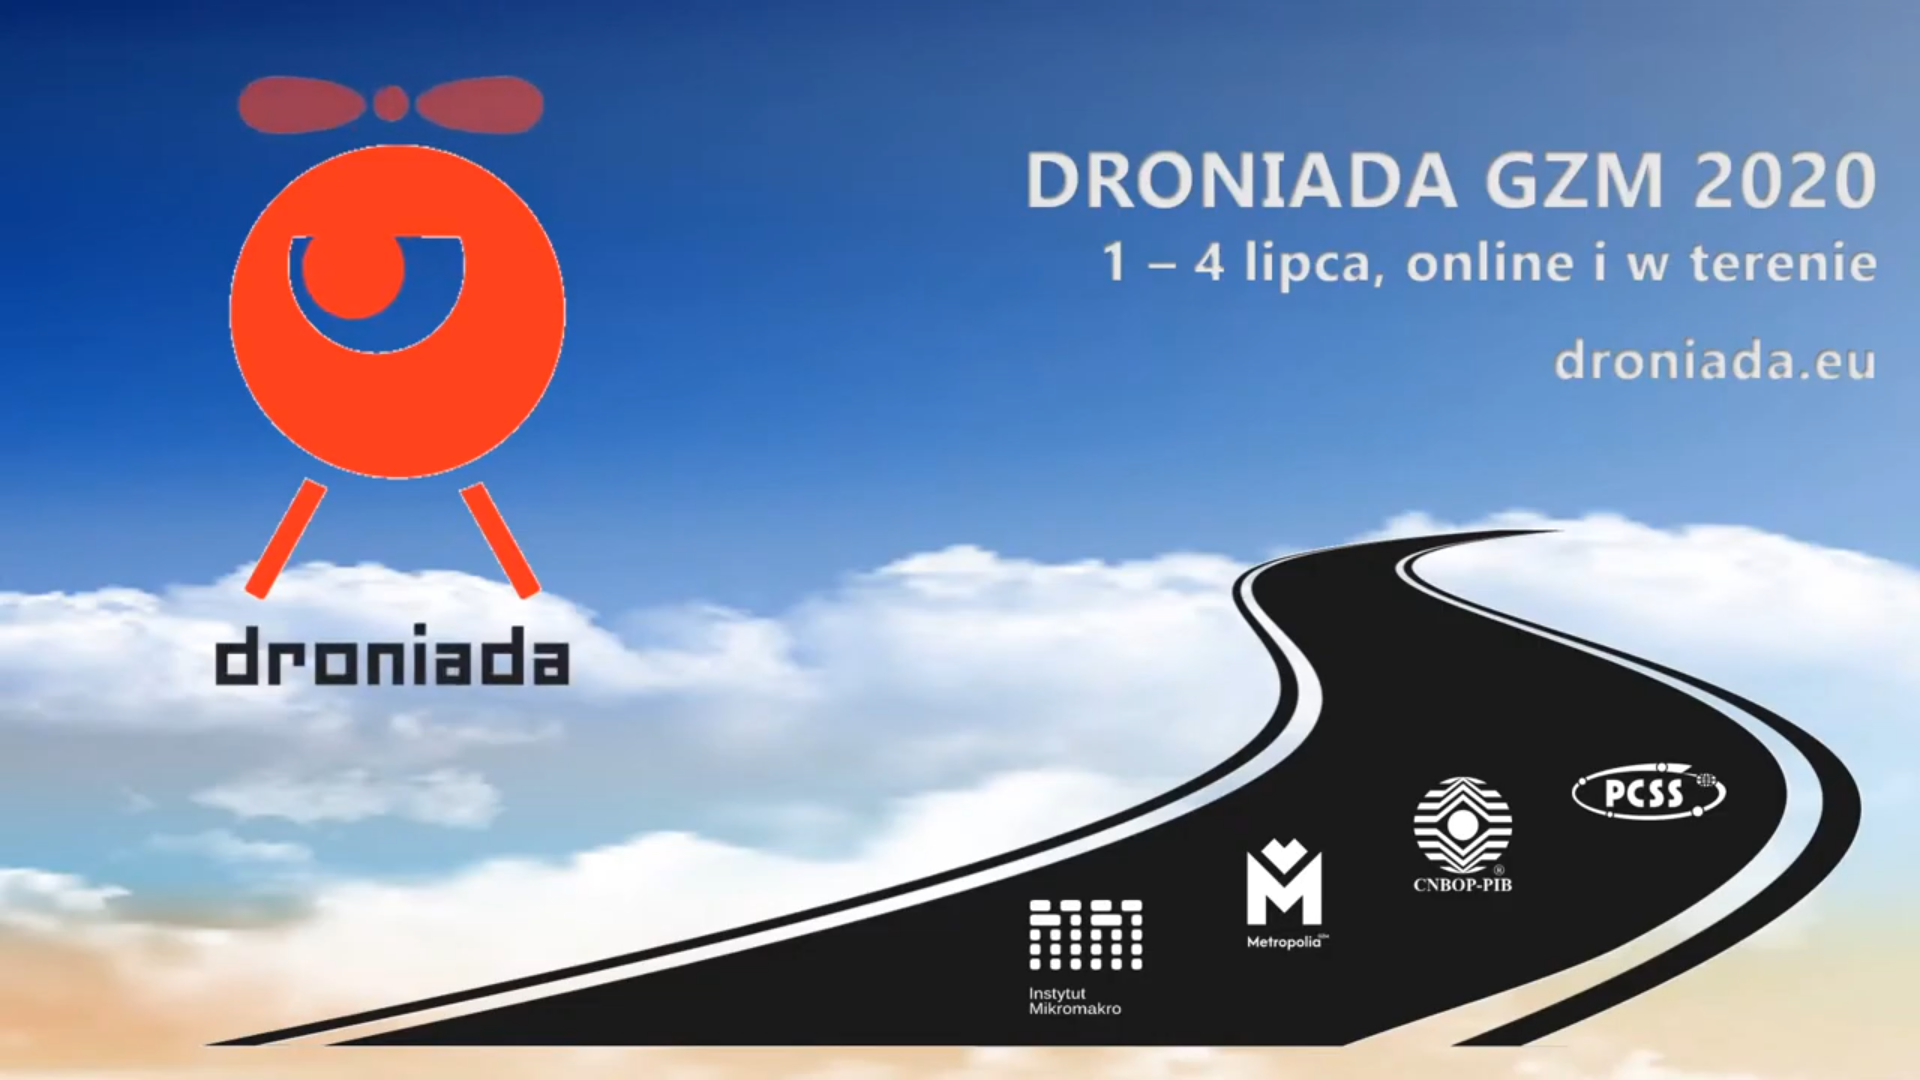 PSNC as a partner of Droniada 2020